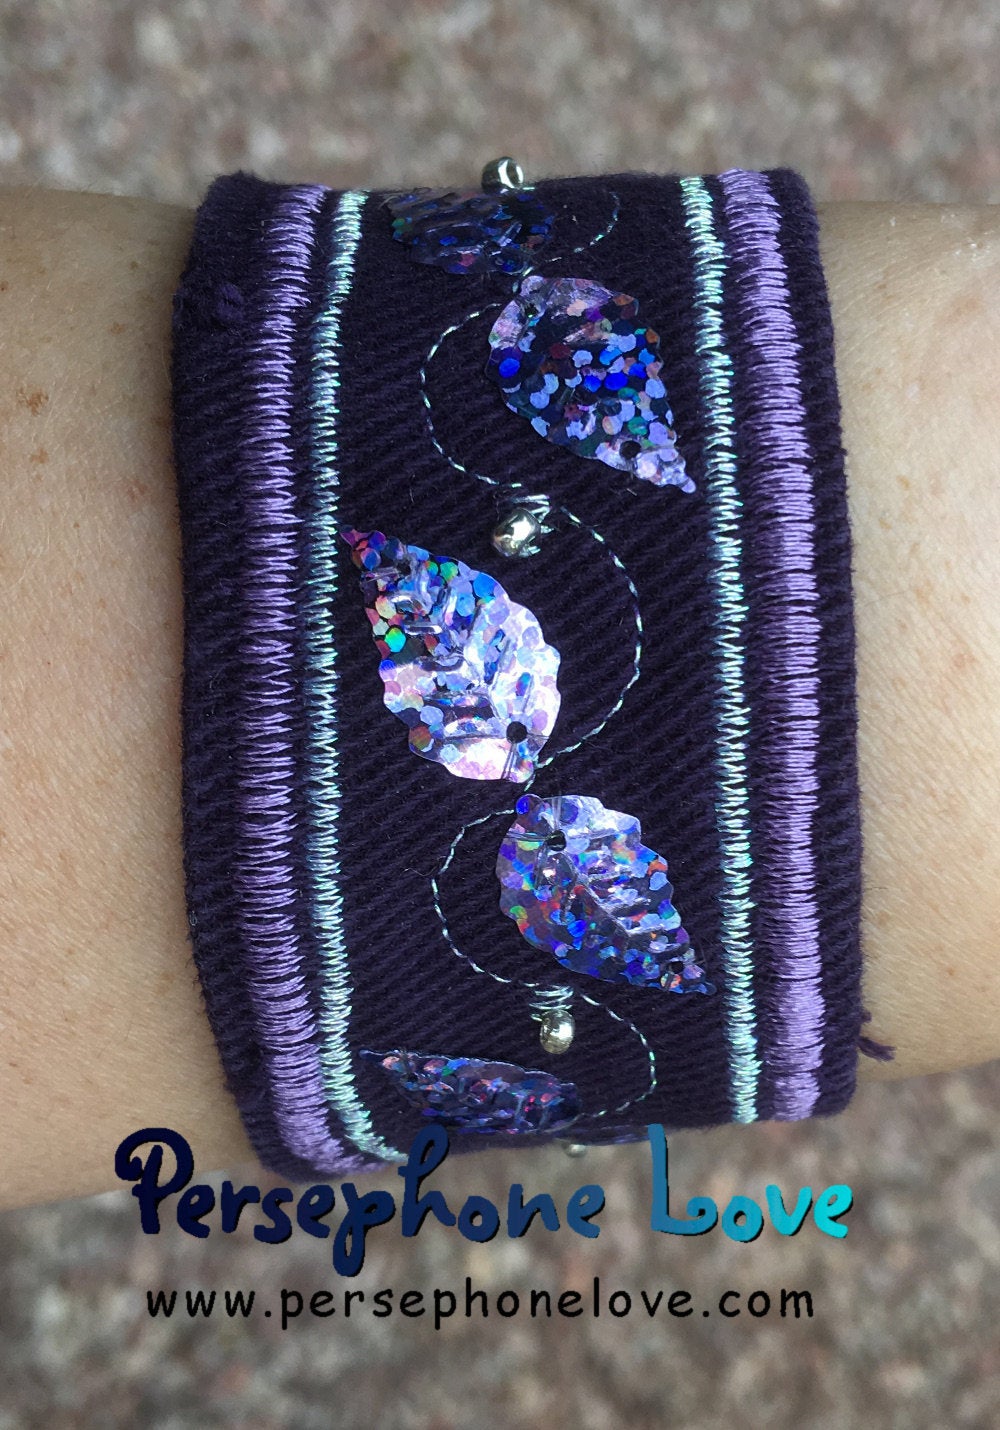 Purple embroidered/beaded purple sequin upcycled denim  bracelet-1170